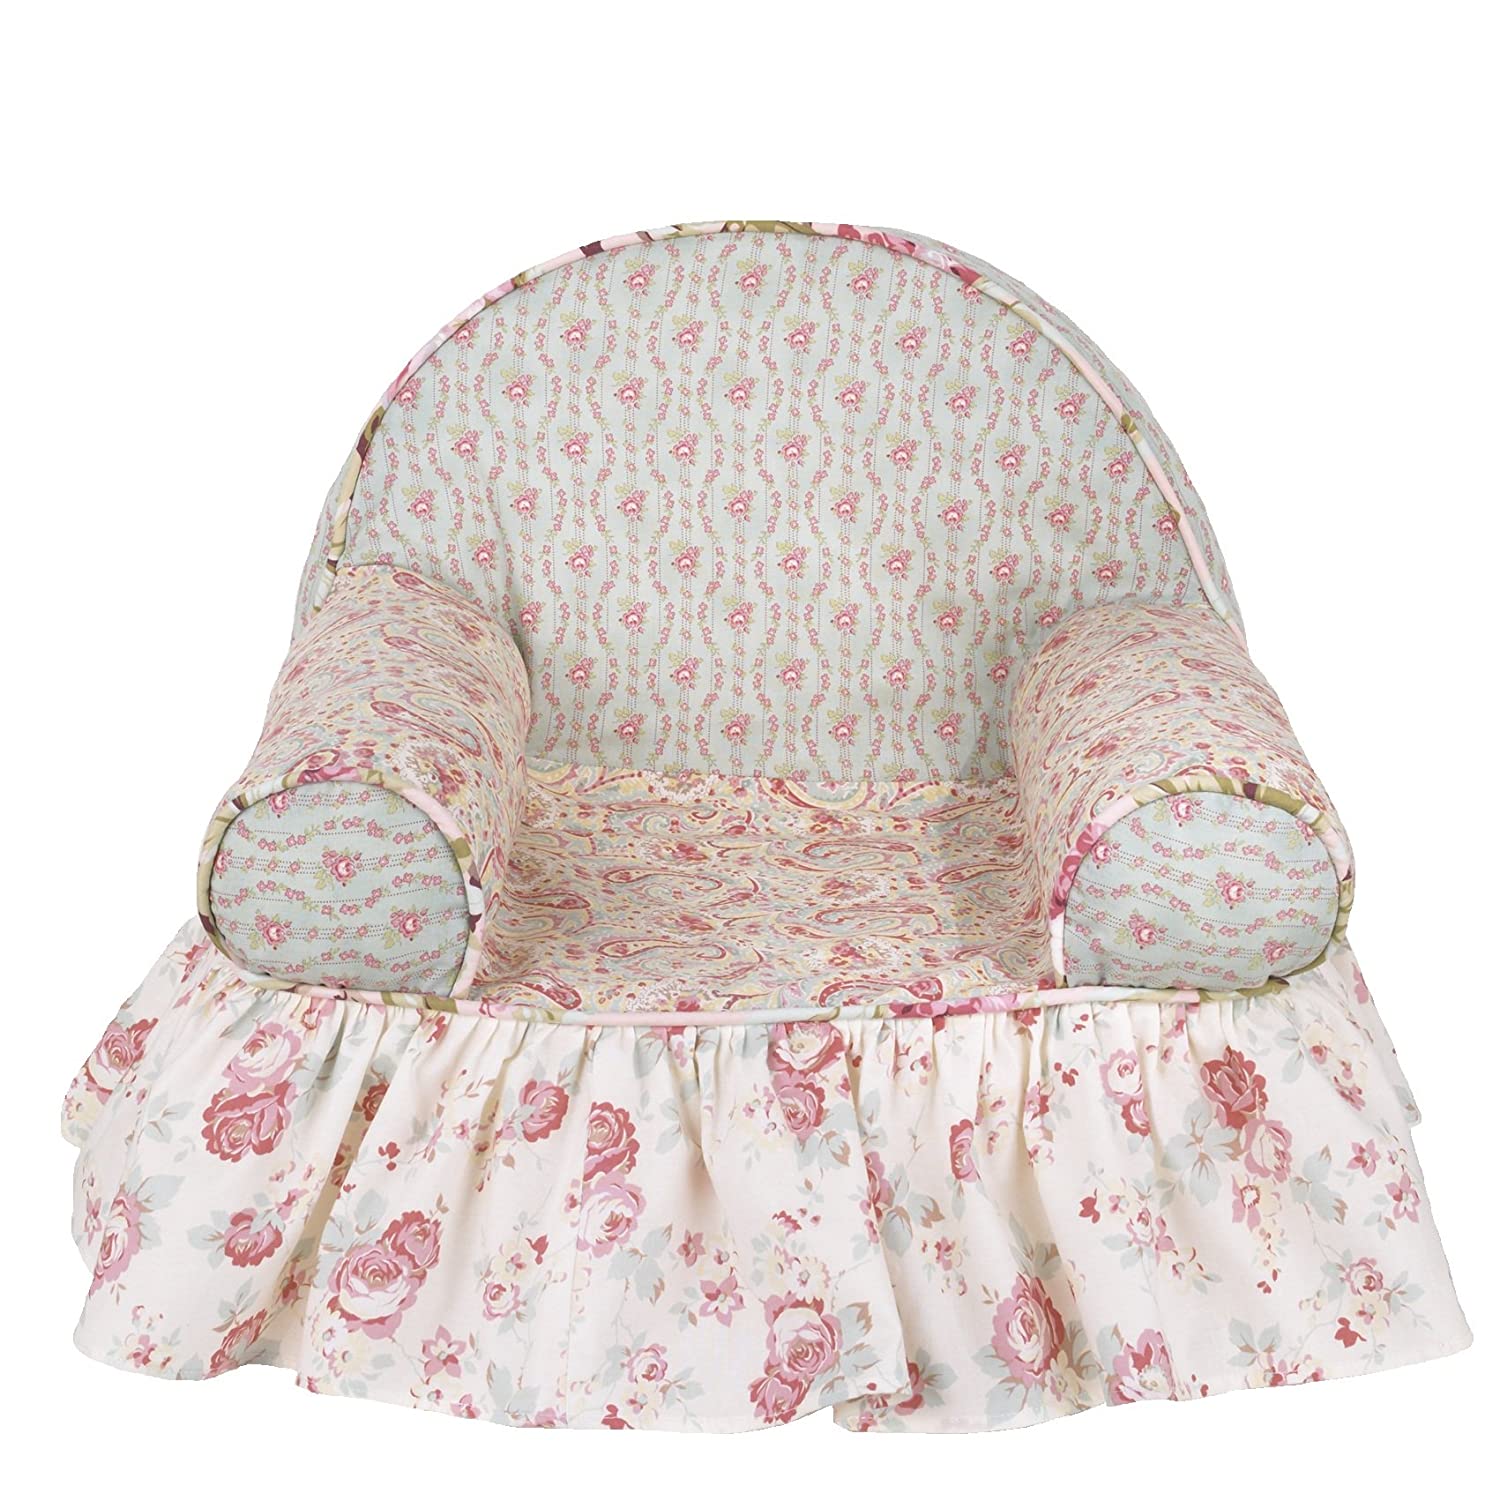 Cotton Tale Designs Baby's 1st Chair, Tea Party
